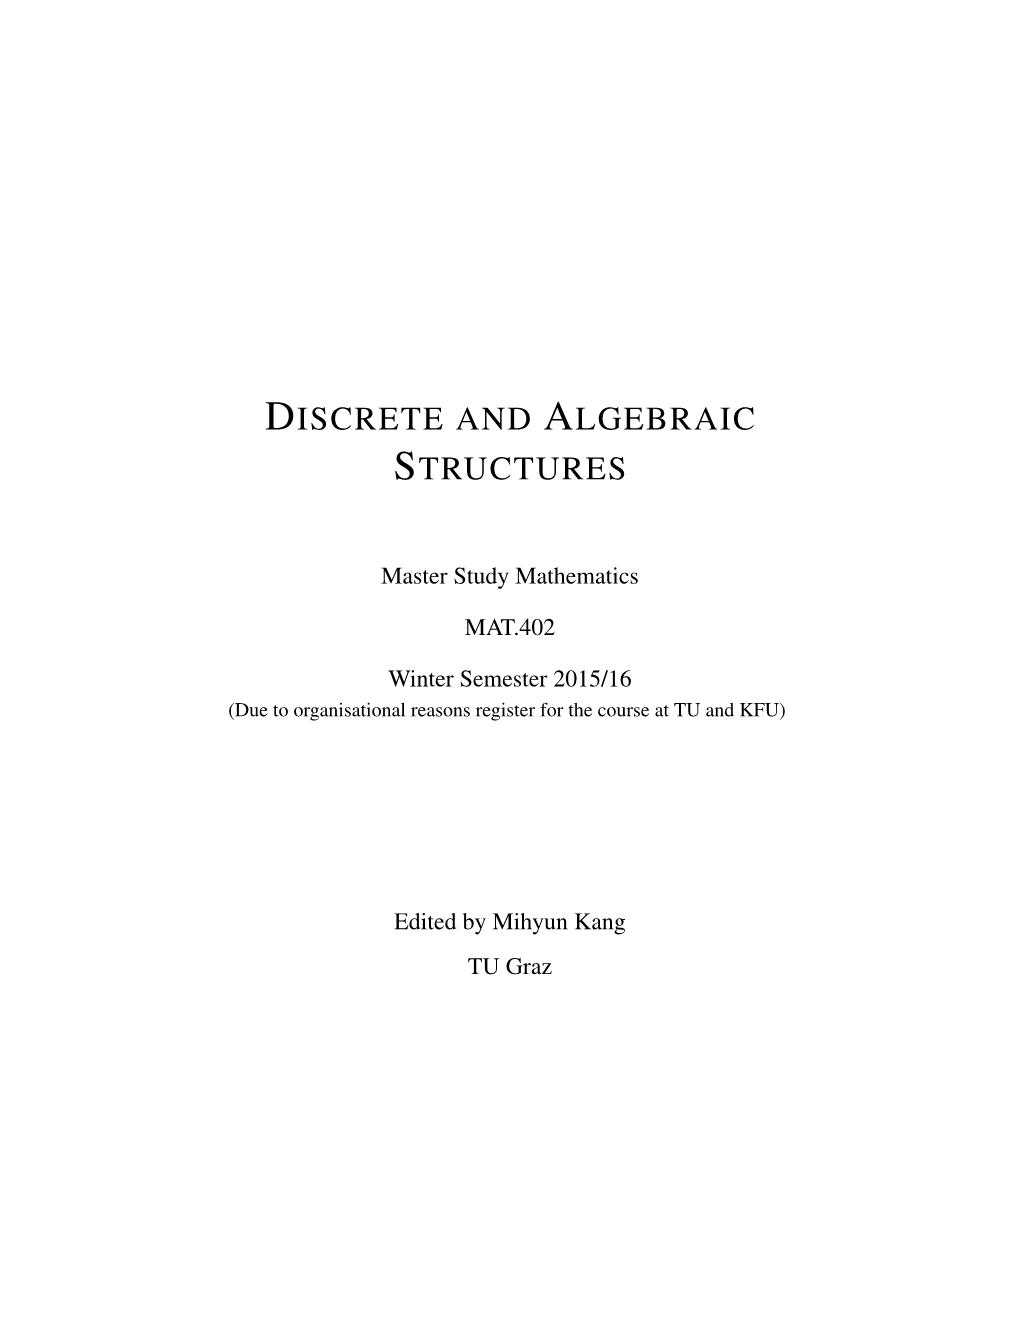 Discrete and Algebraic Structures